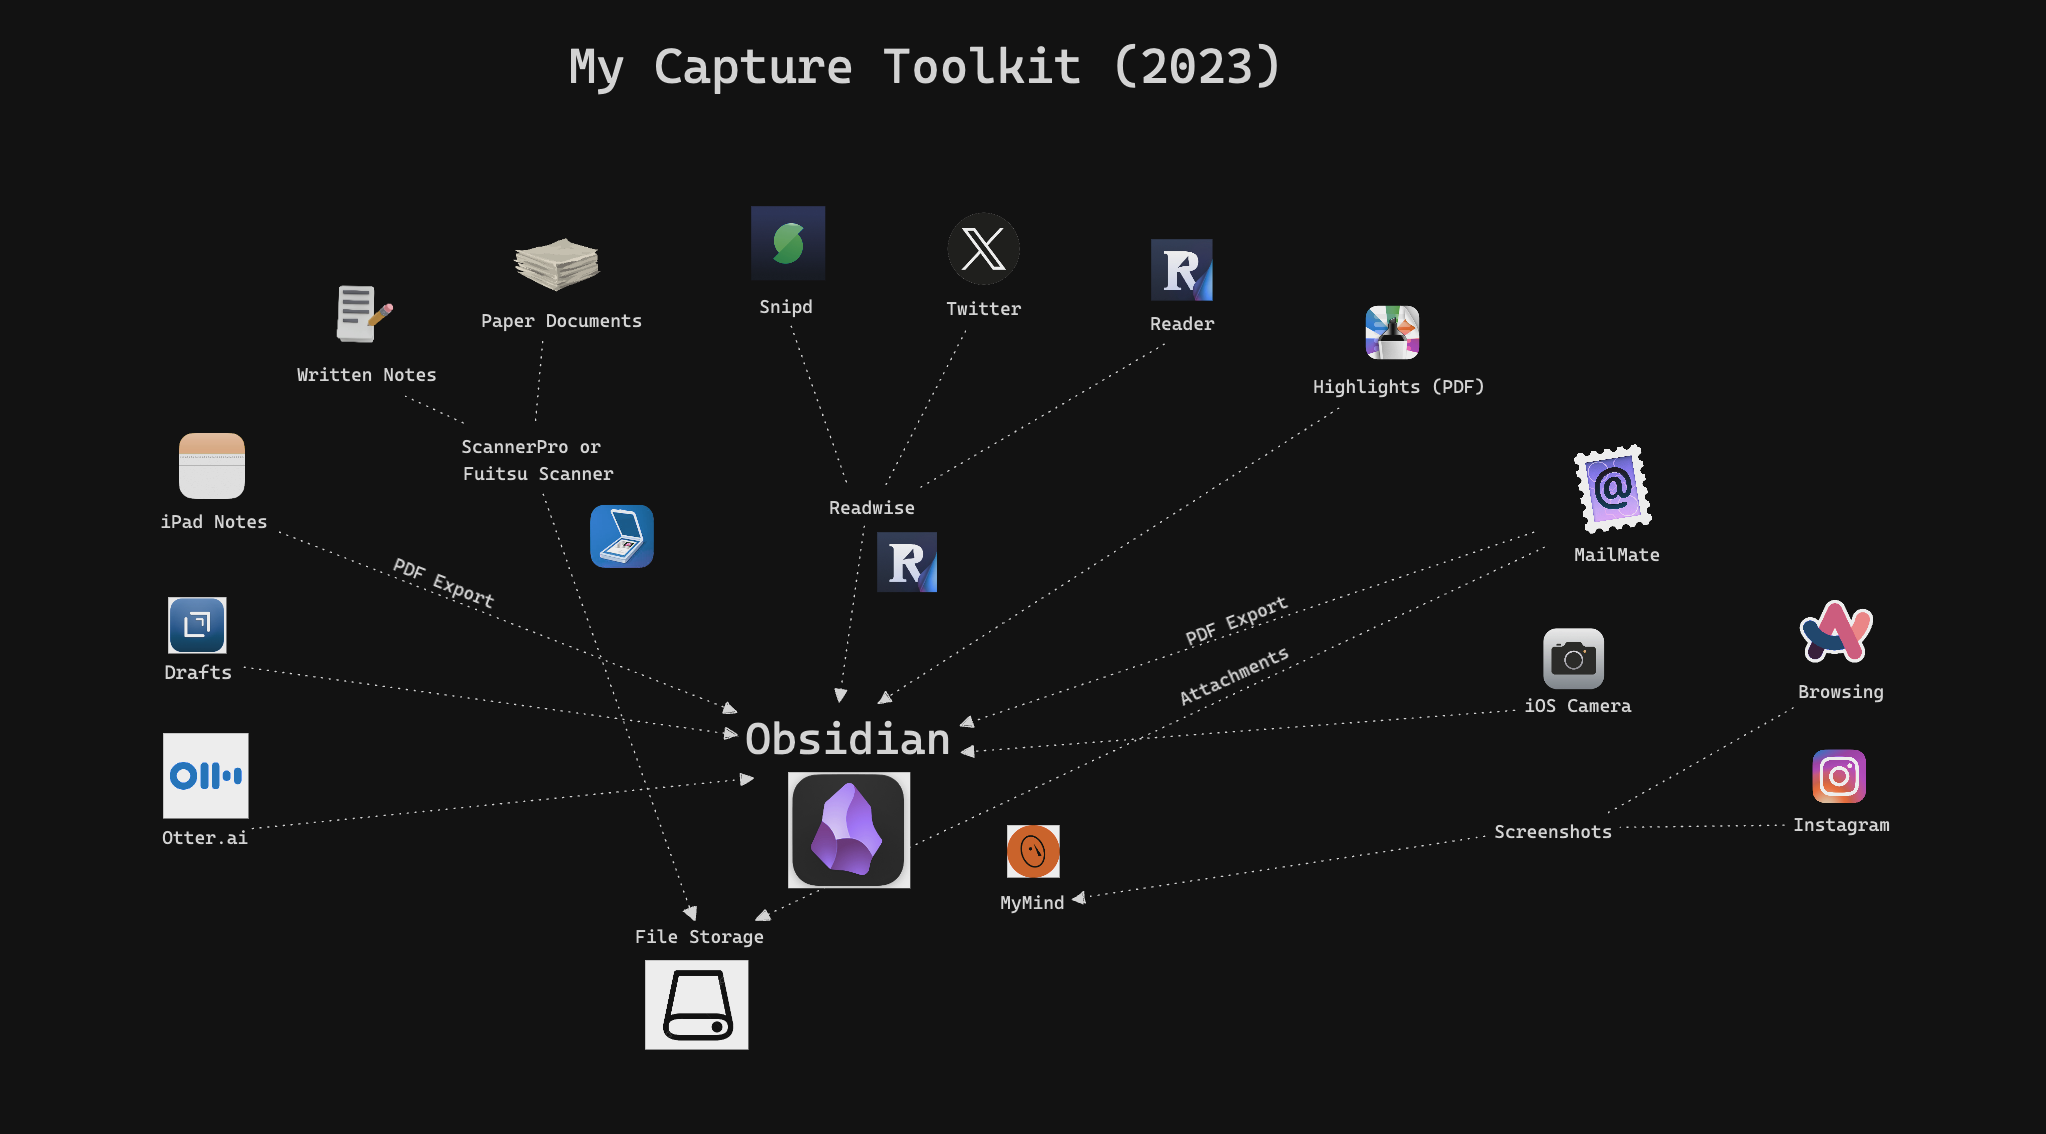 Capture Toolkit 2023